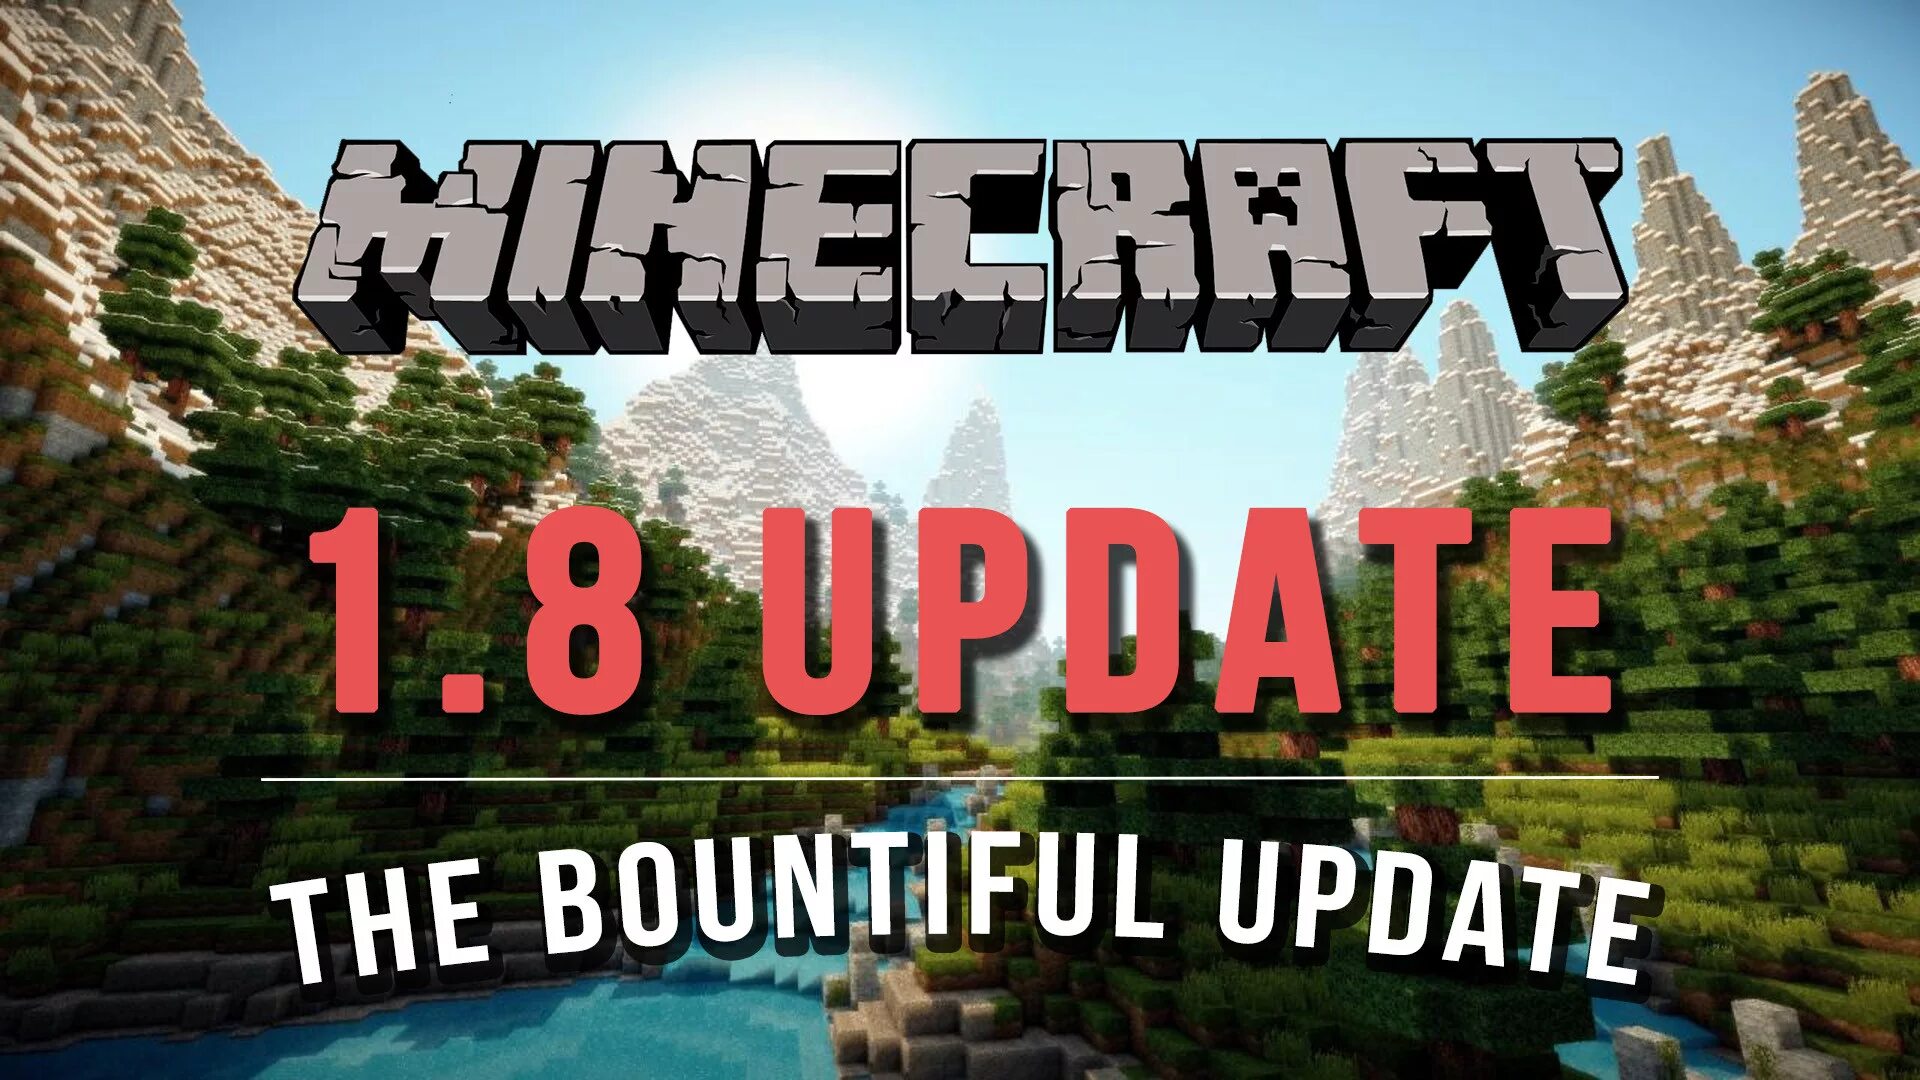 Minecraft Bountiful update. Майнкрафт обновление 1.8. Bountiful update. Майнкрафт 1.8 Bountiful update. 1.8 update